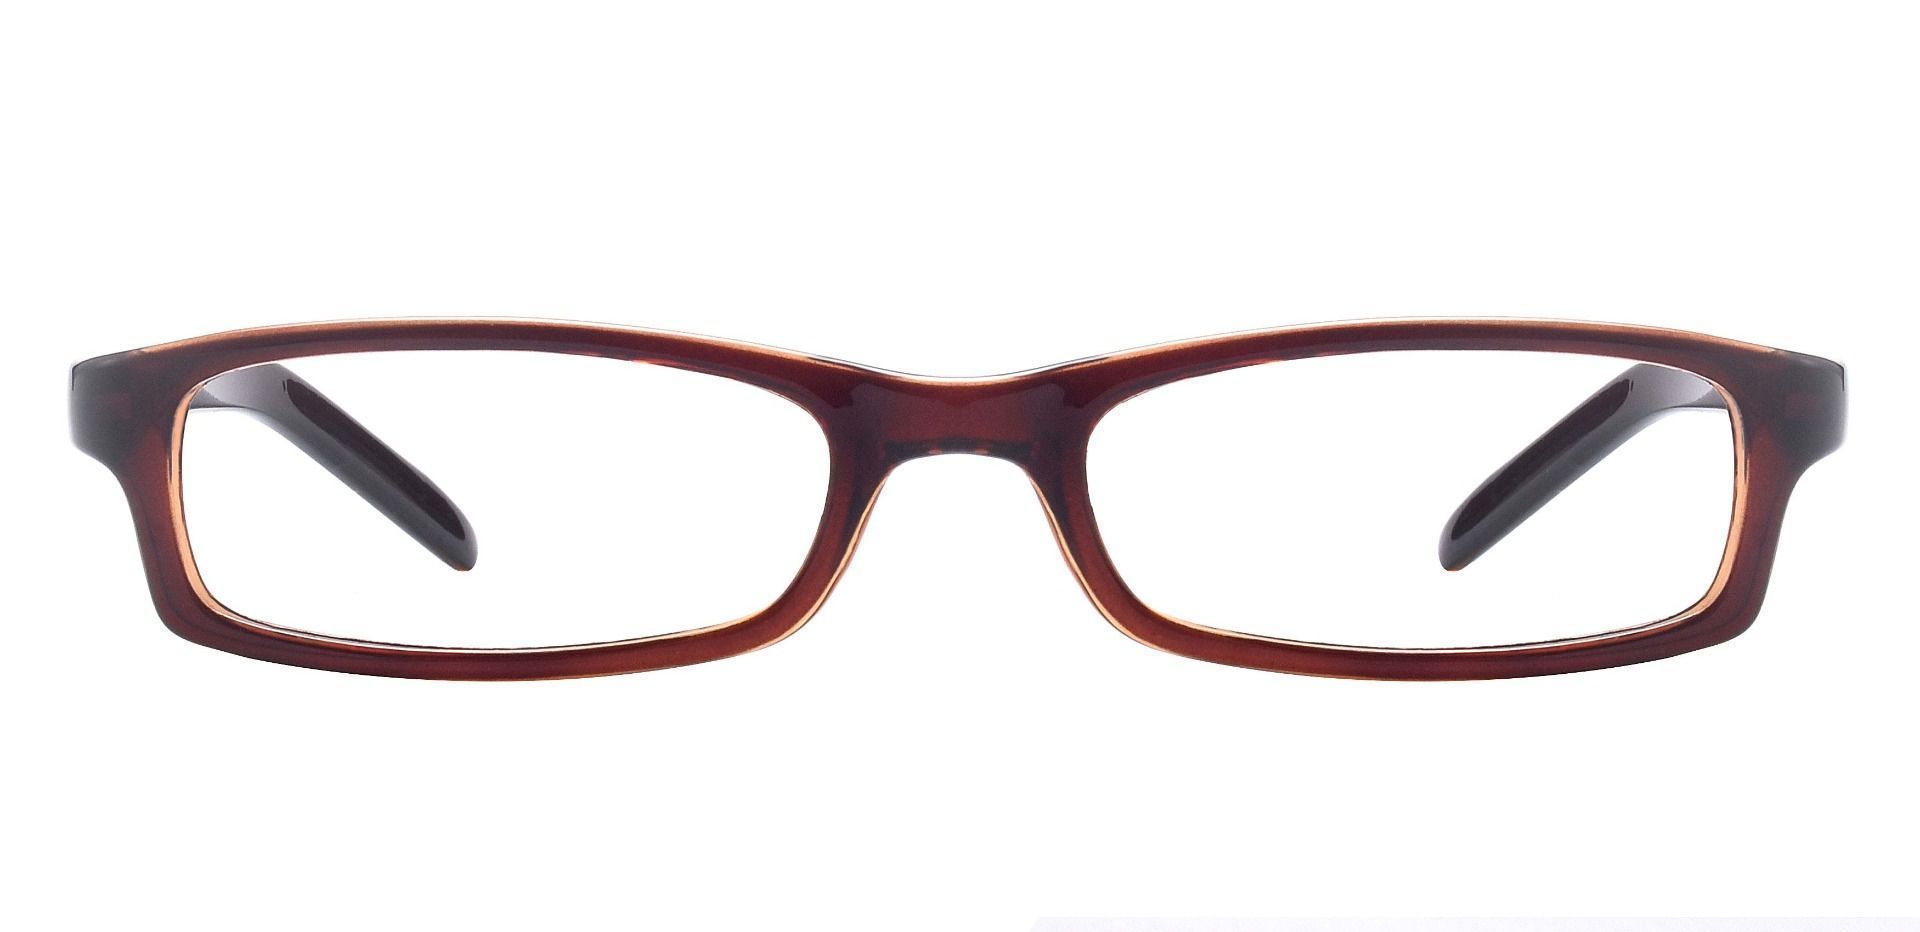 Palmer Rectangle Eyeglasses Frame - Brown